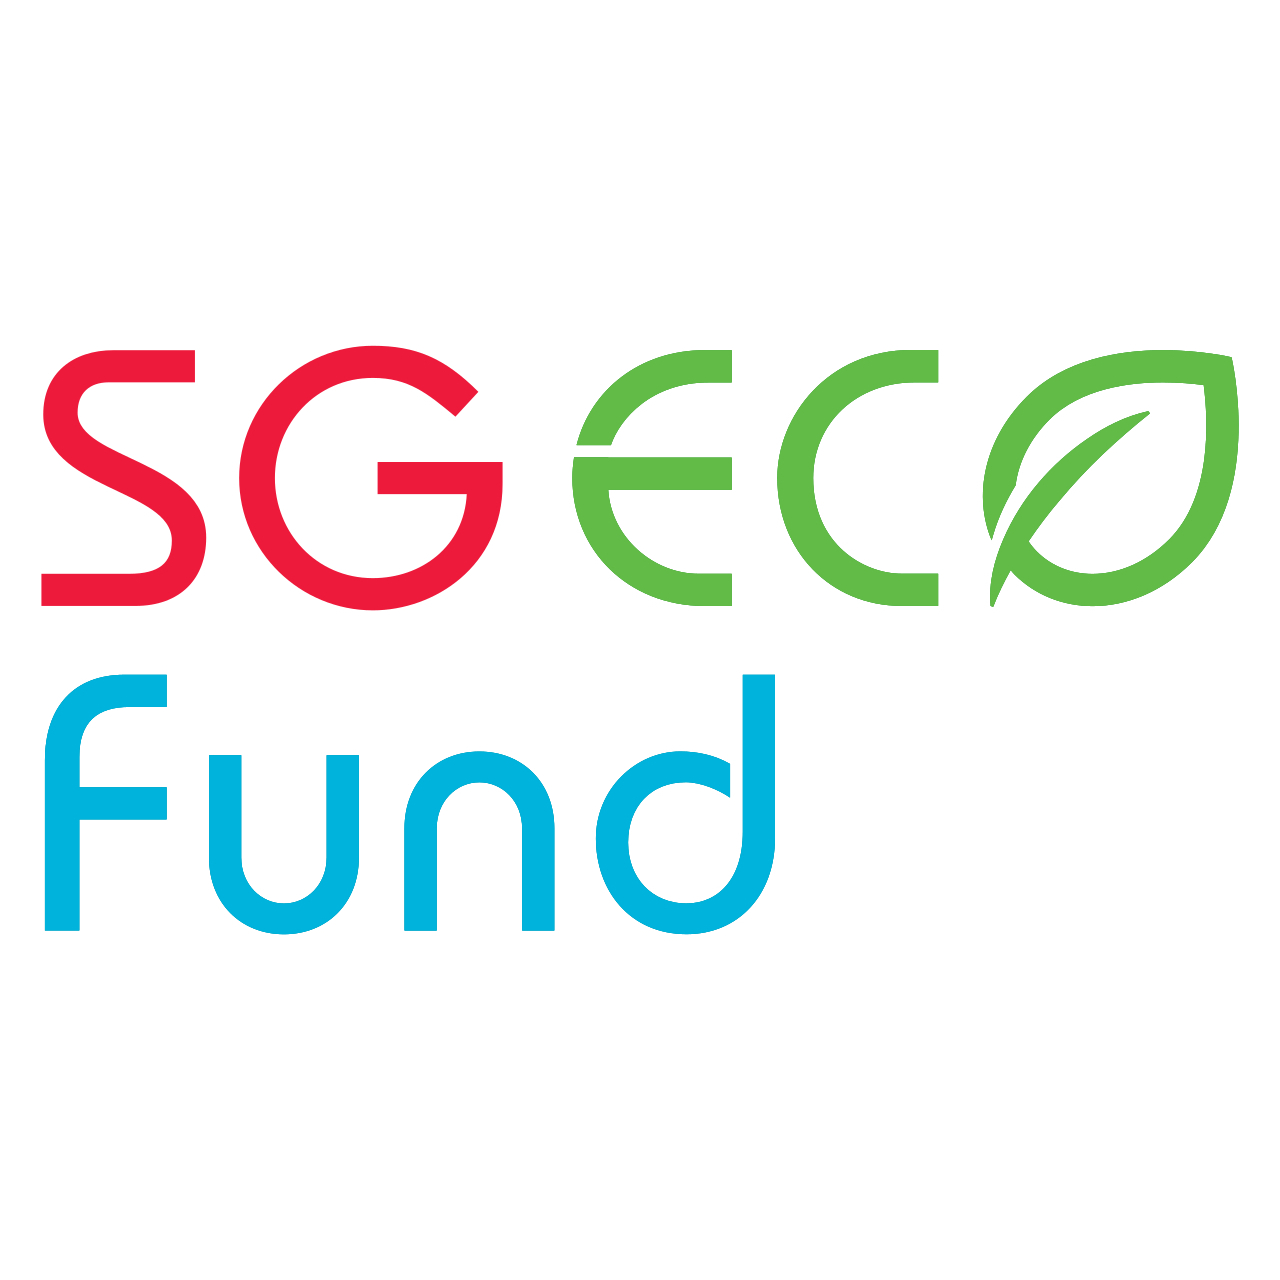 SG Eco Fund